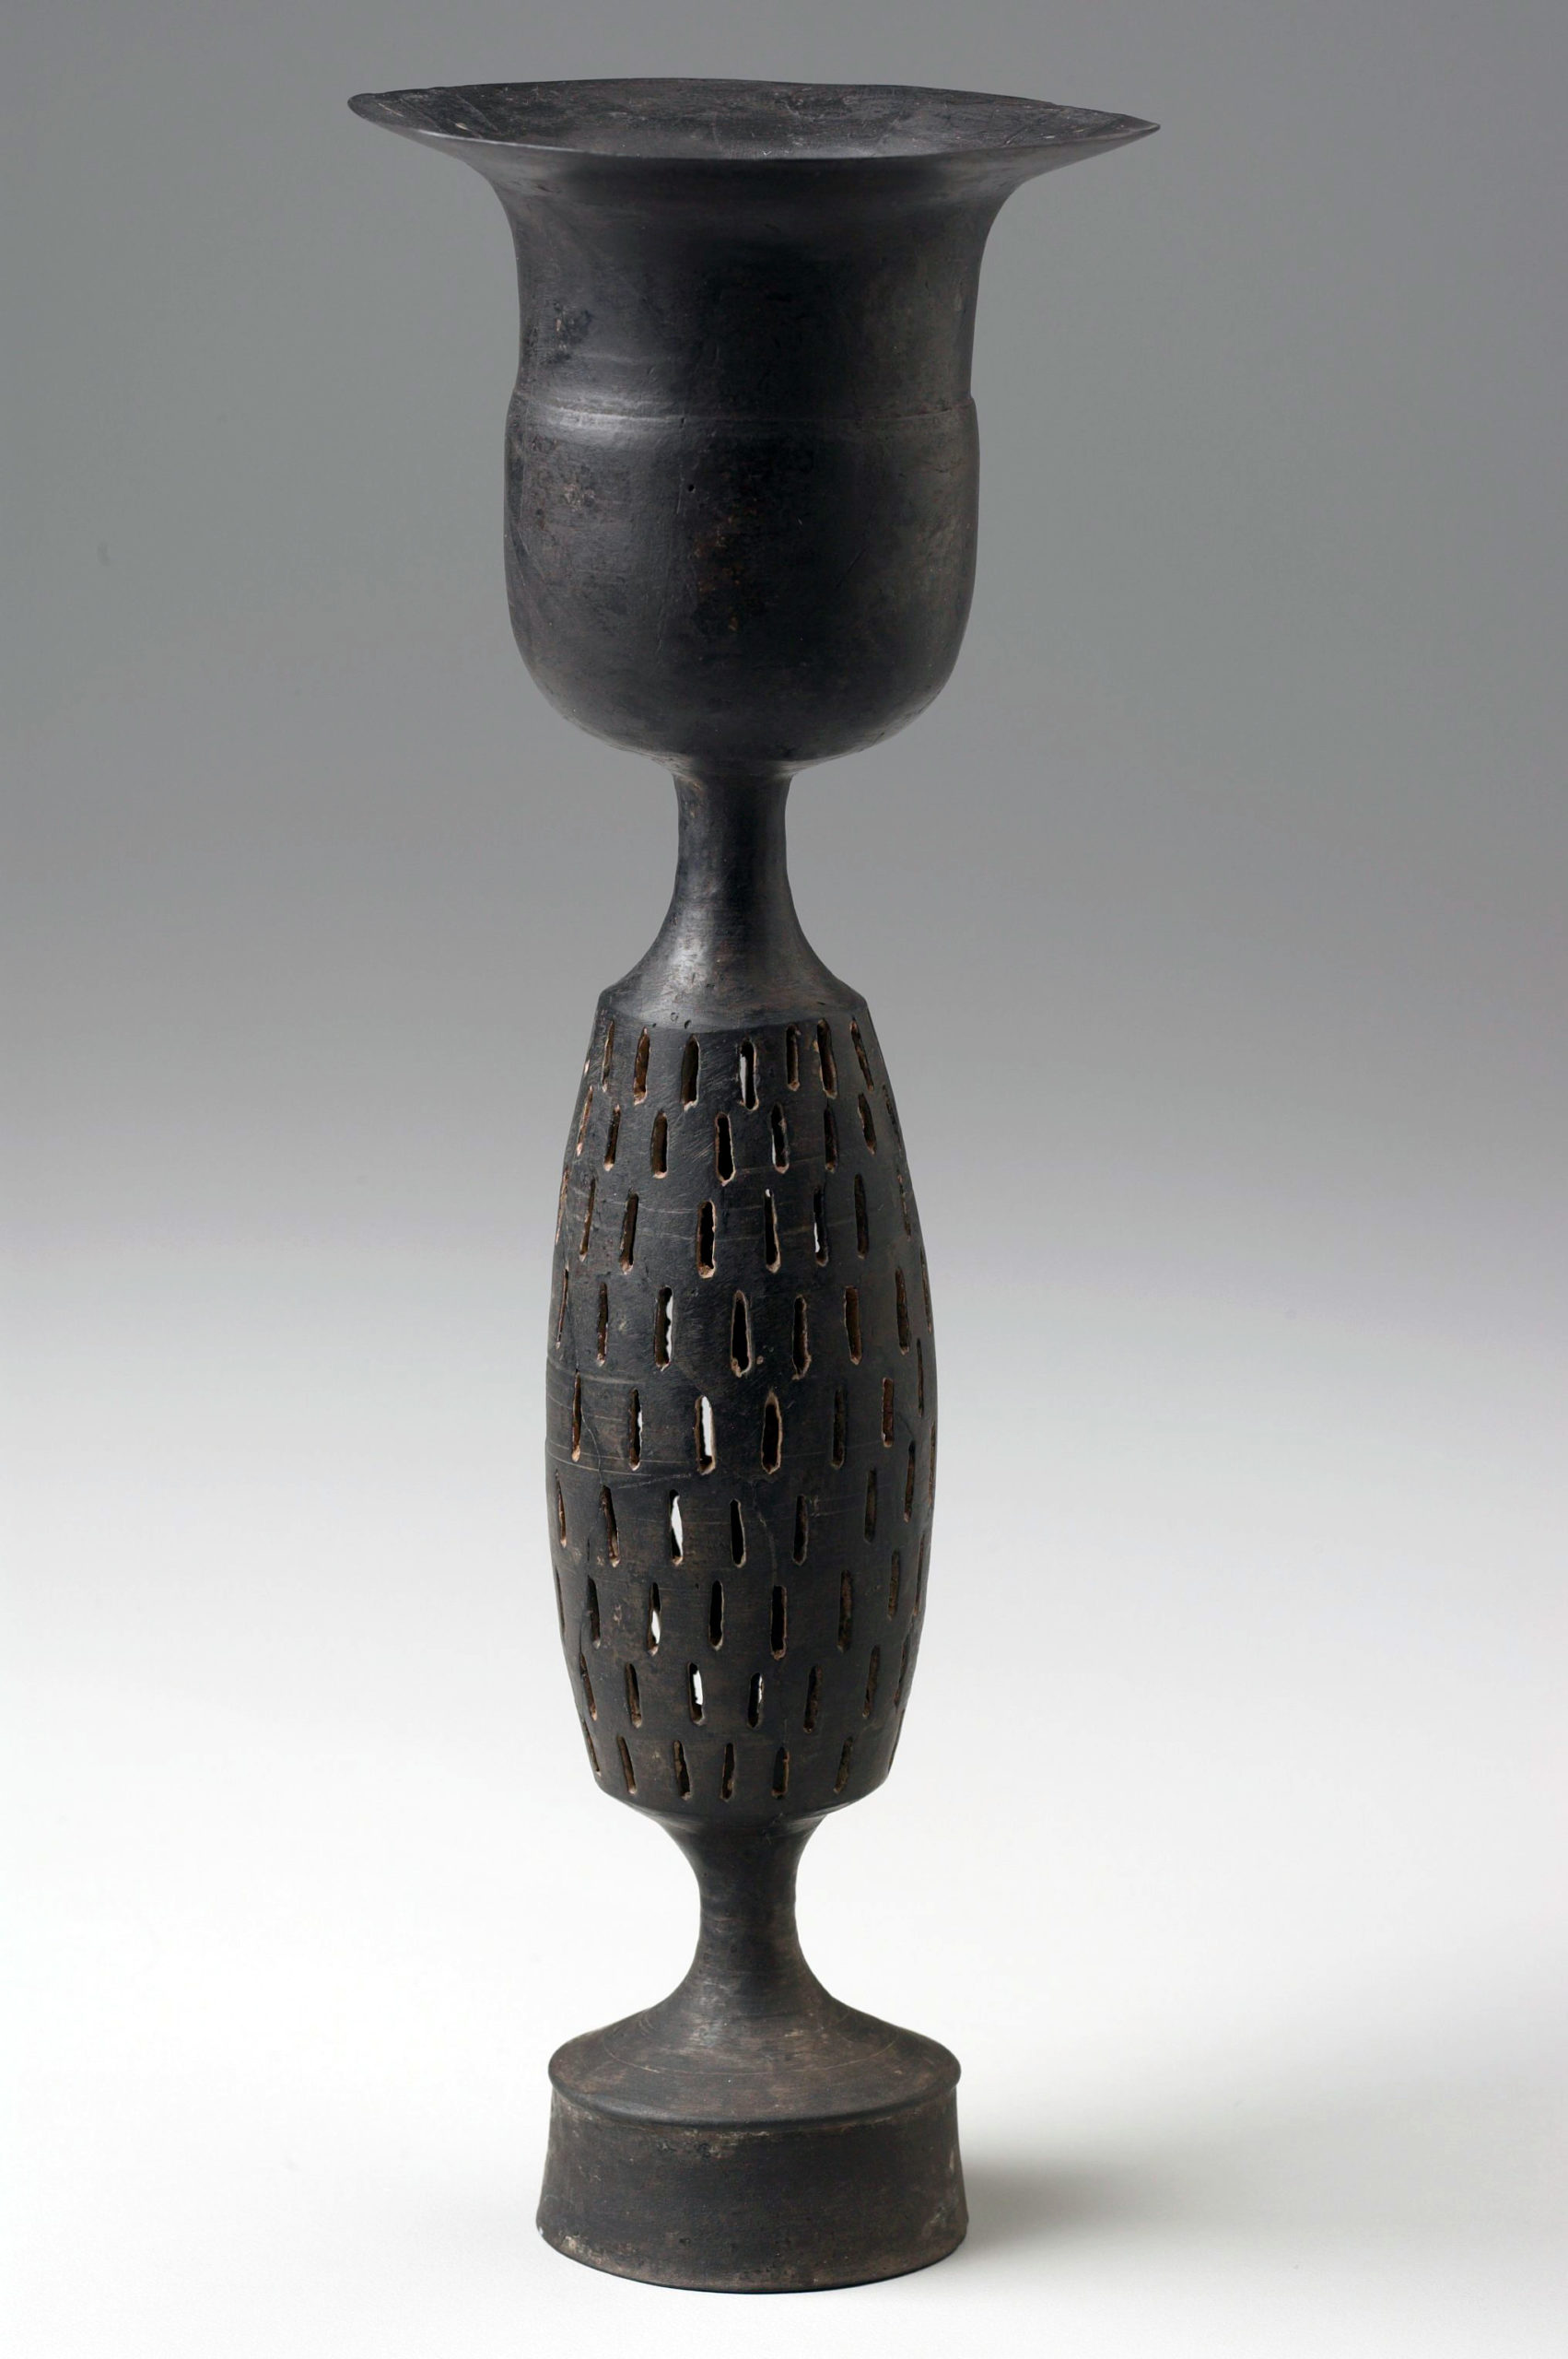 Stem Cup, Longshan culture, c. 2500–2000 B.C.E., burnished earthenware, China, 22.7 x 8.41 cm (Minneapolis Institute of Art)